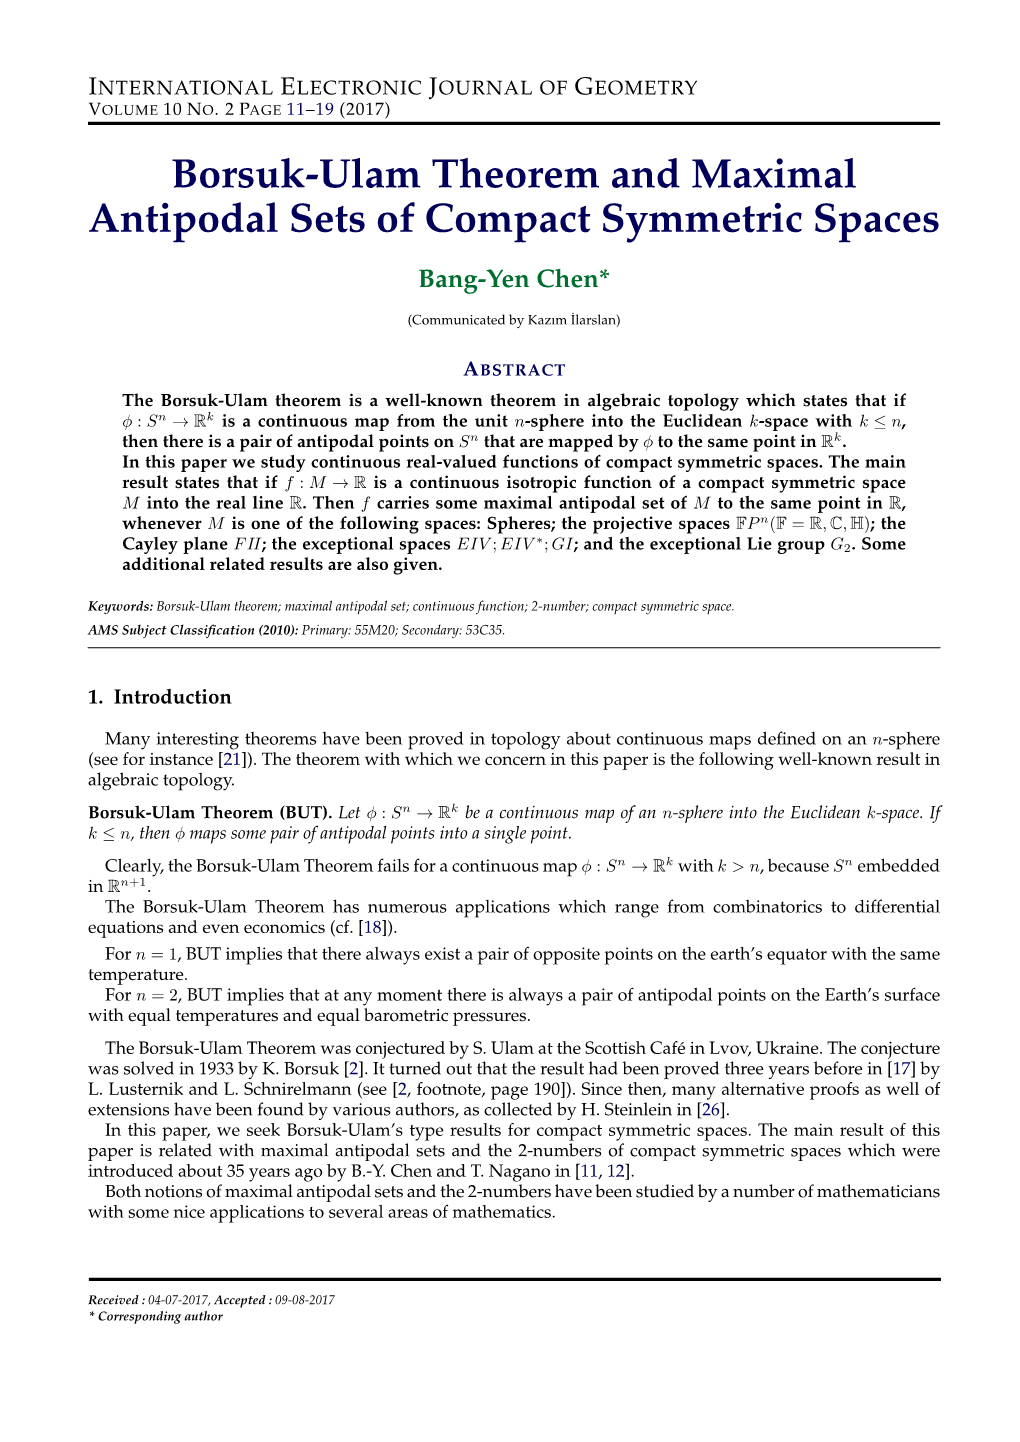 Borsuk-Ulam Theorem and Maximal Antipodal Sets of Compact Symmetric Spaces